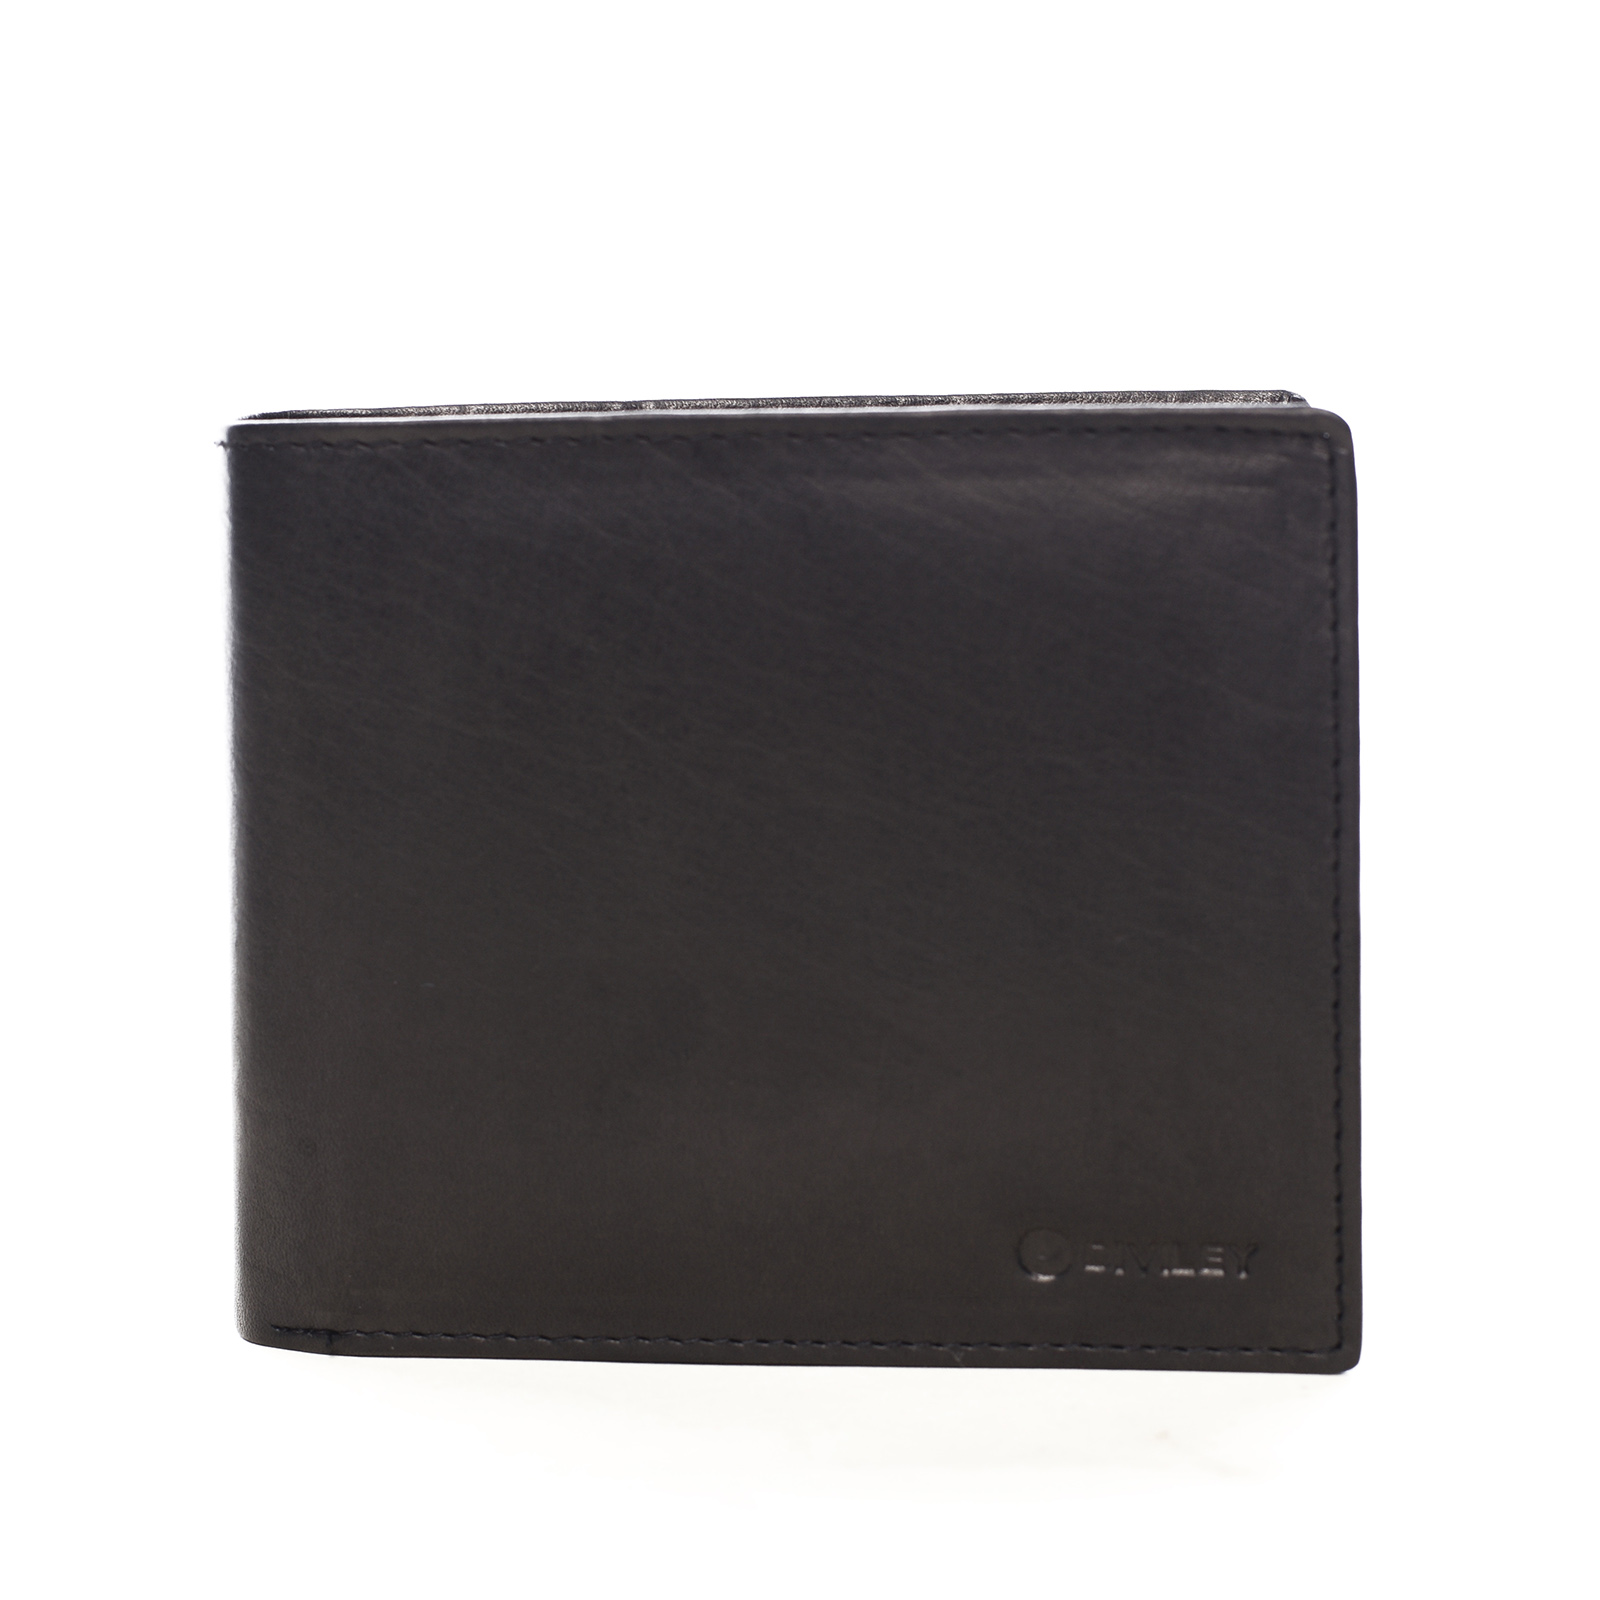 Pánská kožená peněženka černá - Diviley Anton